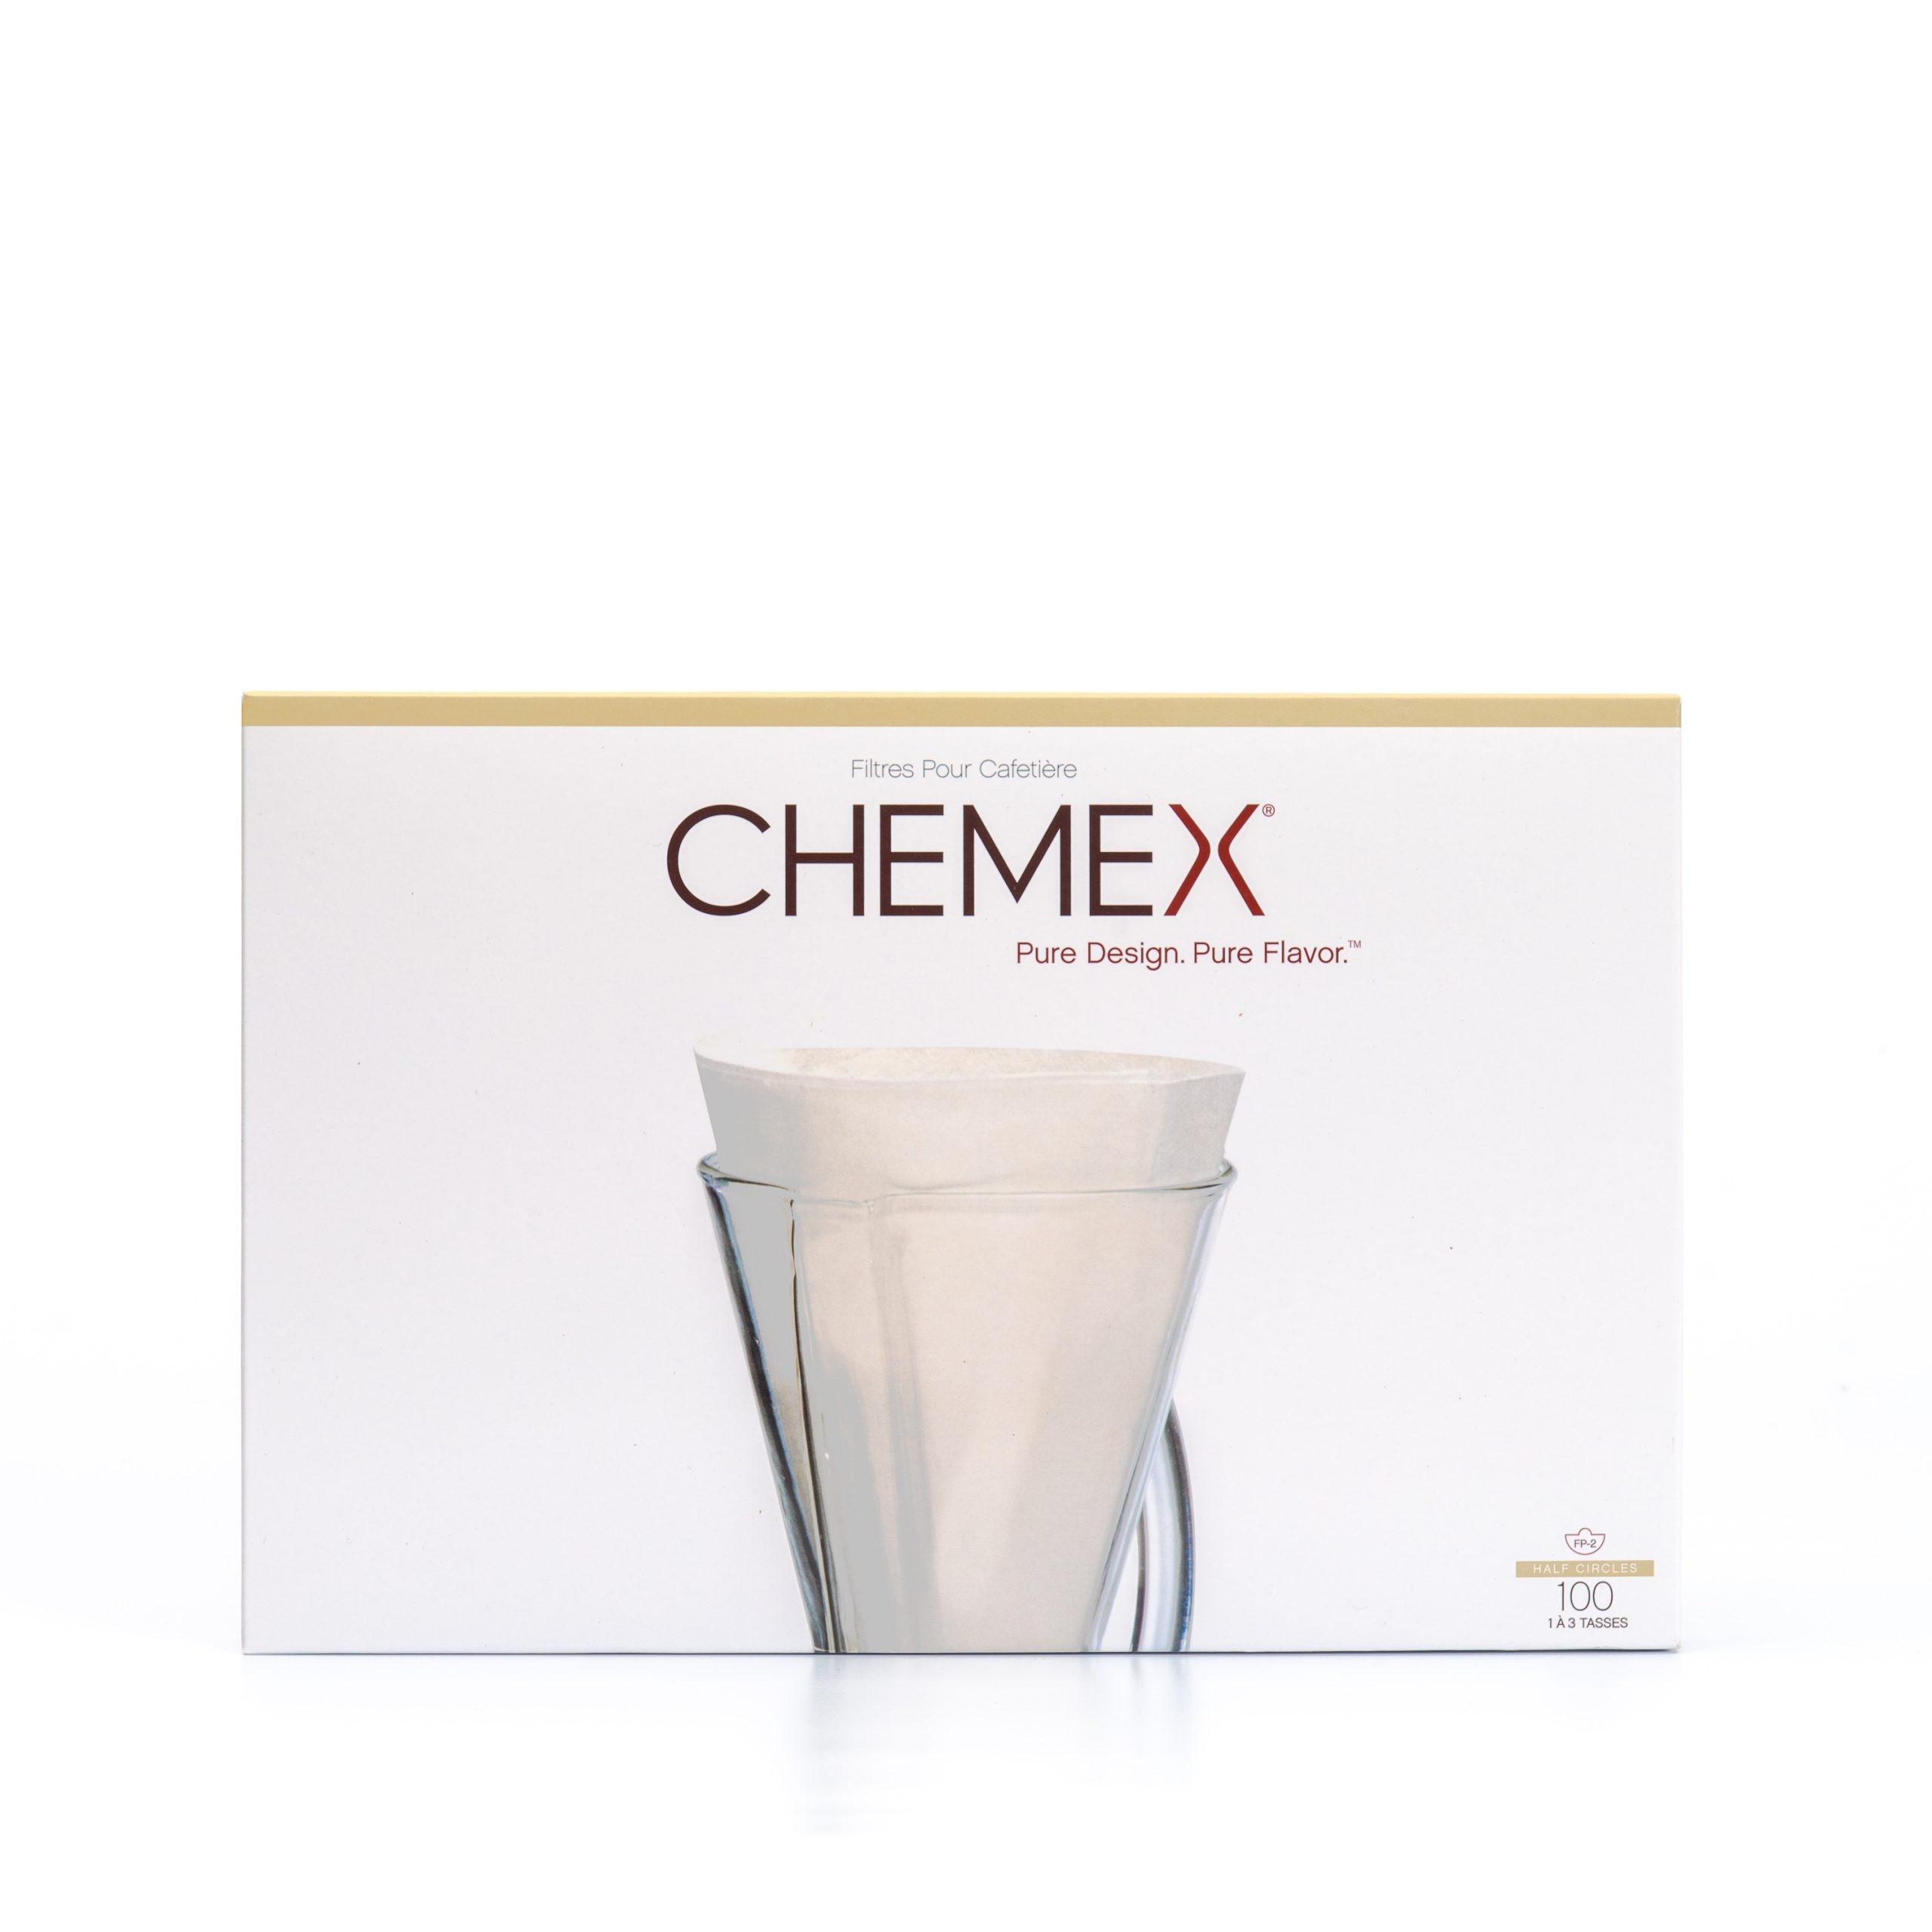 CHEMEX FILTER / 3 CUPS